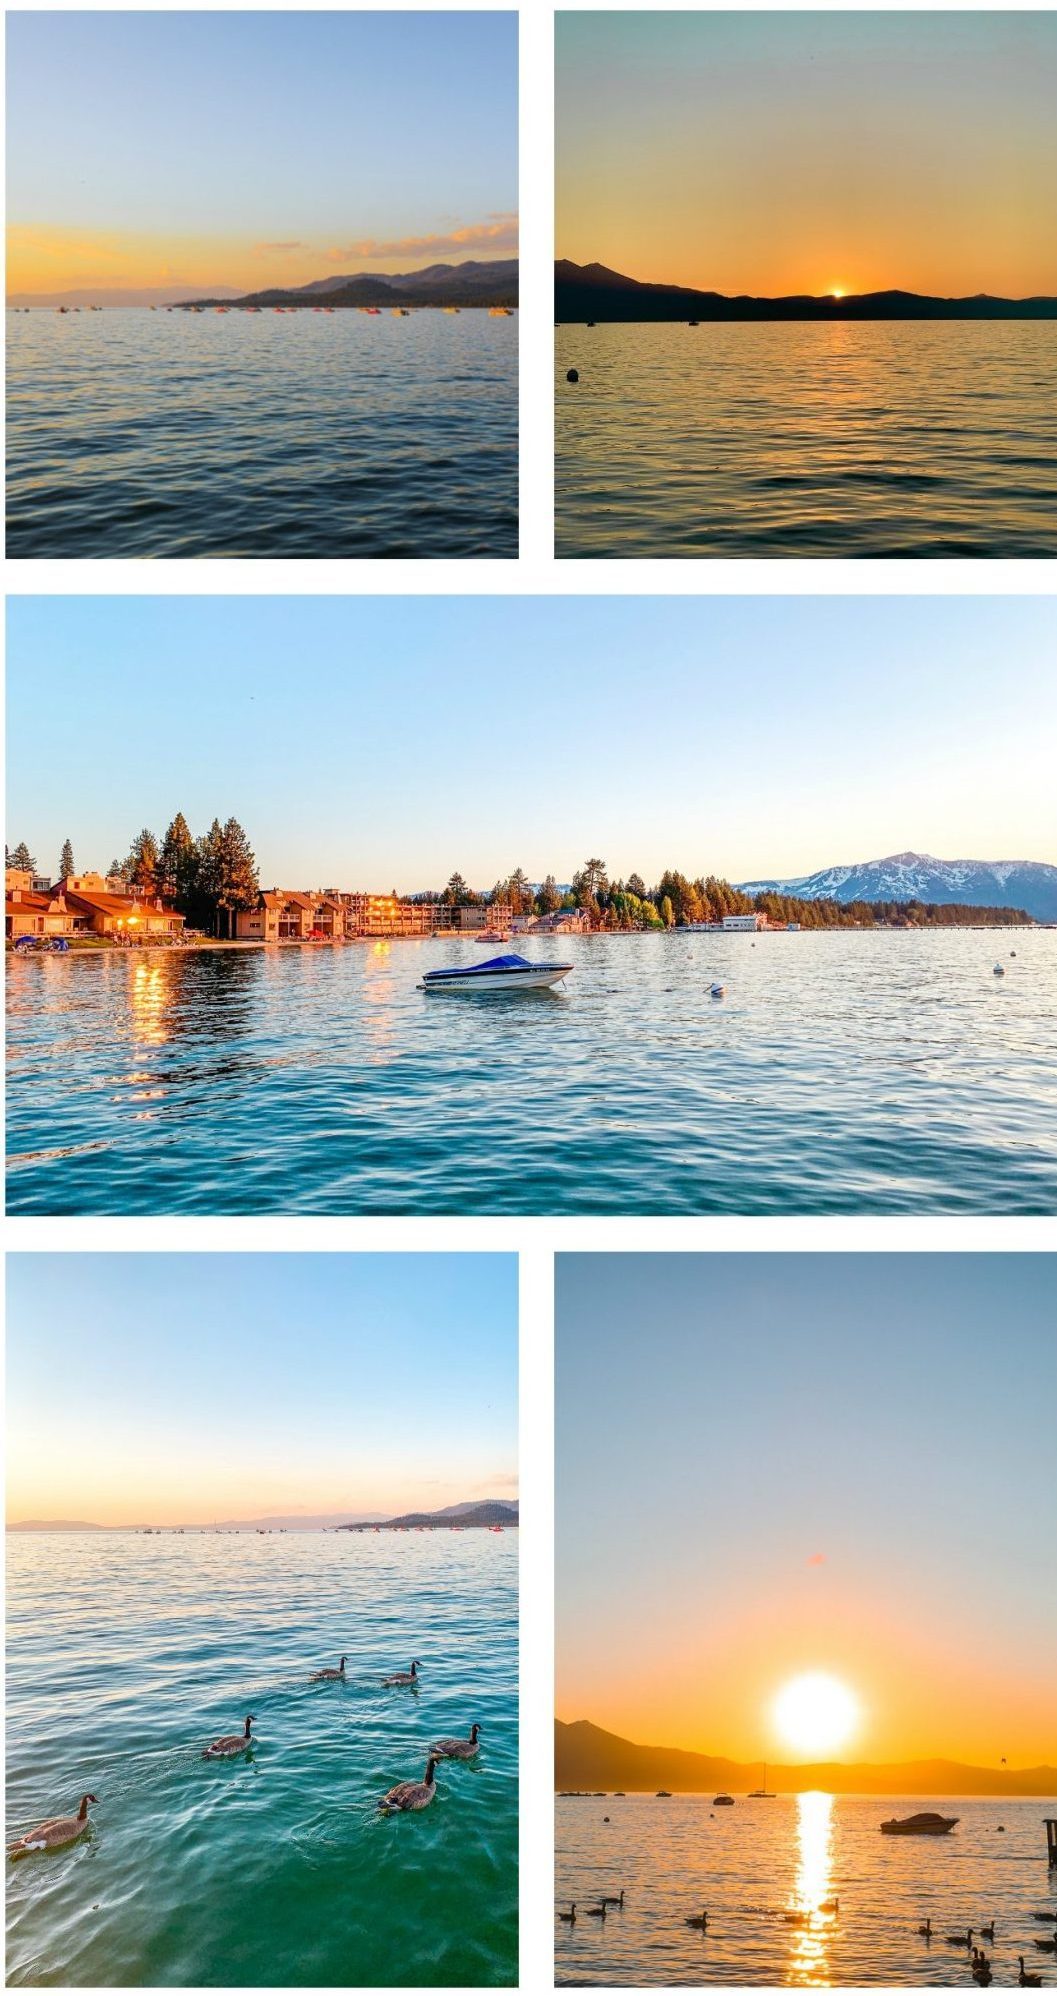 Lake Tahoe South, Travel Blog, Simply Taralynn, Travel Blogger, Traveling, Blog, Travel, Mountains, Edgewood Bistro, California, Nevada, Summer, Trips, Traveling to Tahoe, Lake Tahoe, Where to eat, drink, stay, boating, see, things to do in Lake Tahoe, summer in lake tahoe